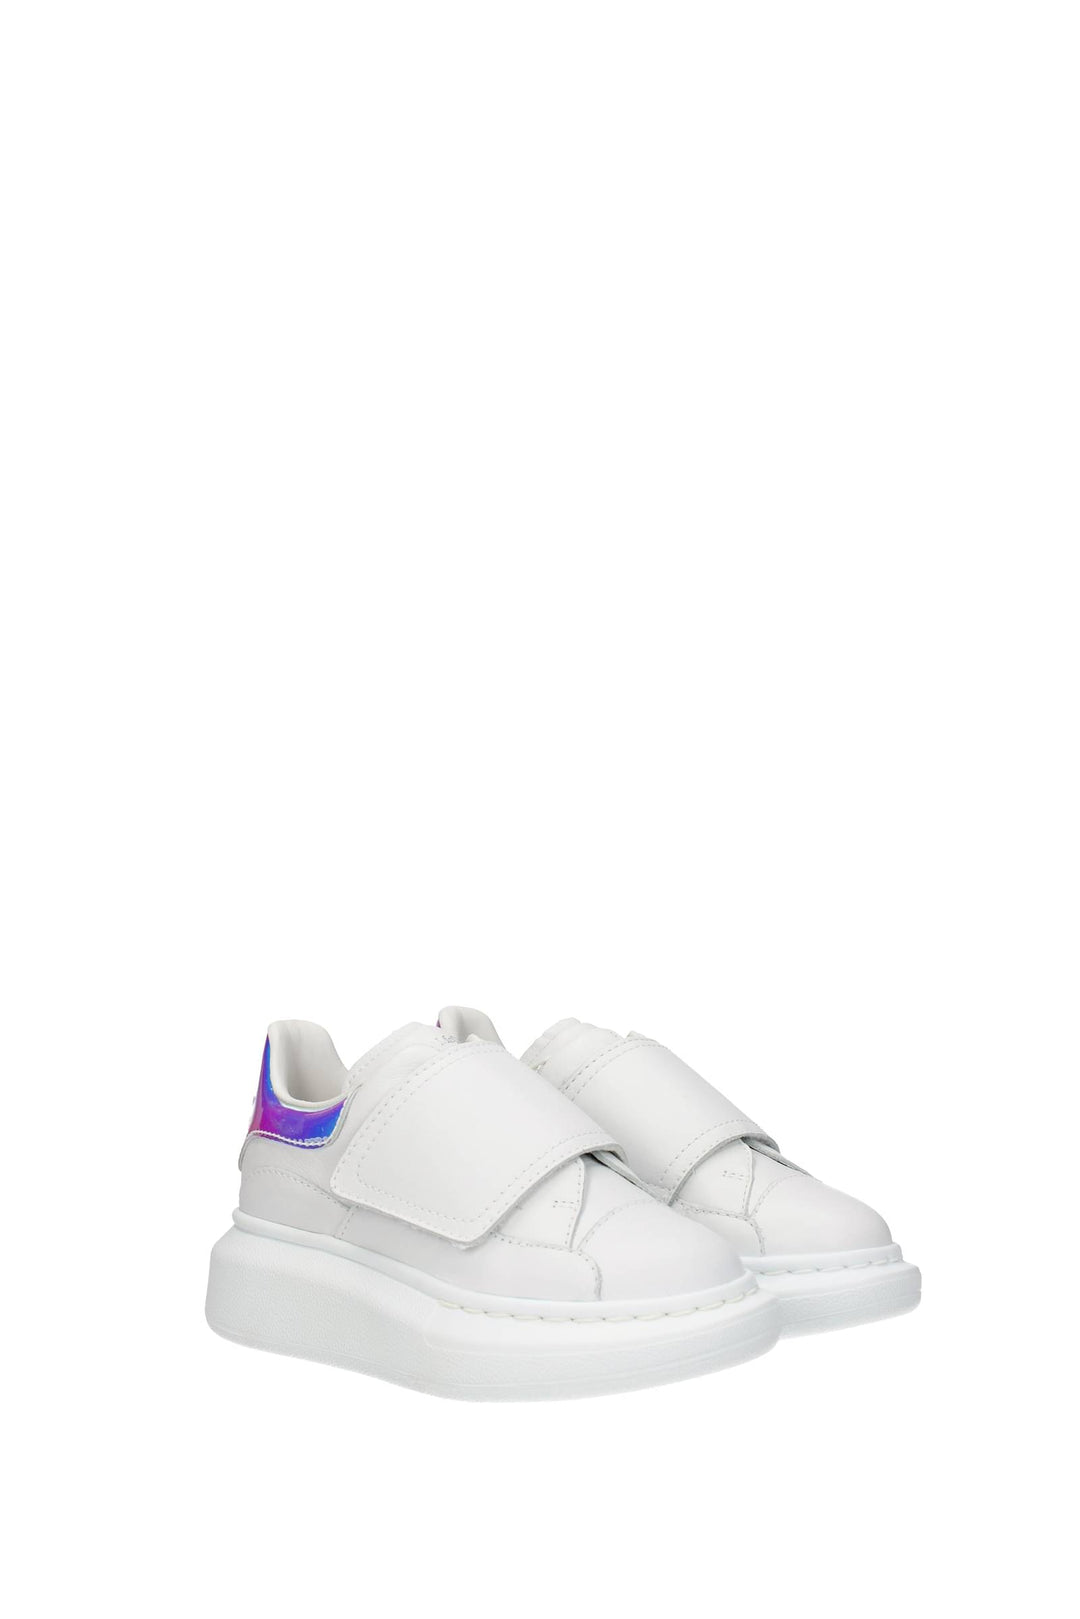 Idee Regalo Sneakers Kids Pelle Bianco Multicolore - Alexander McQueen - Donna